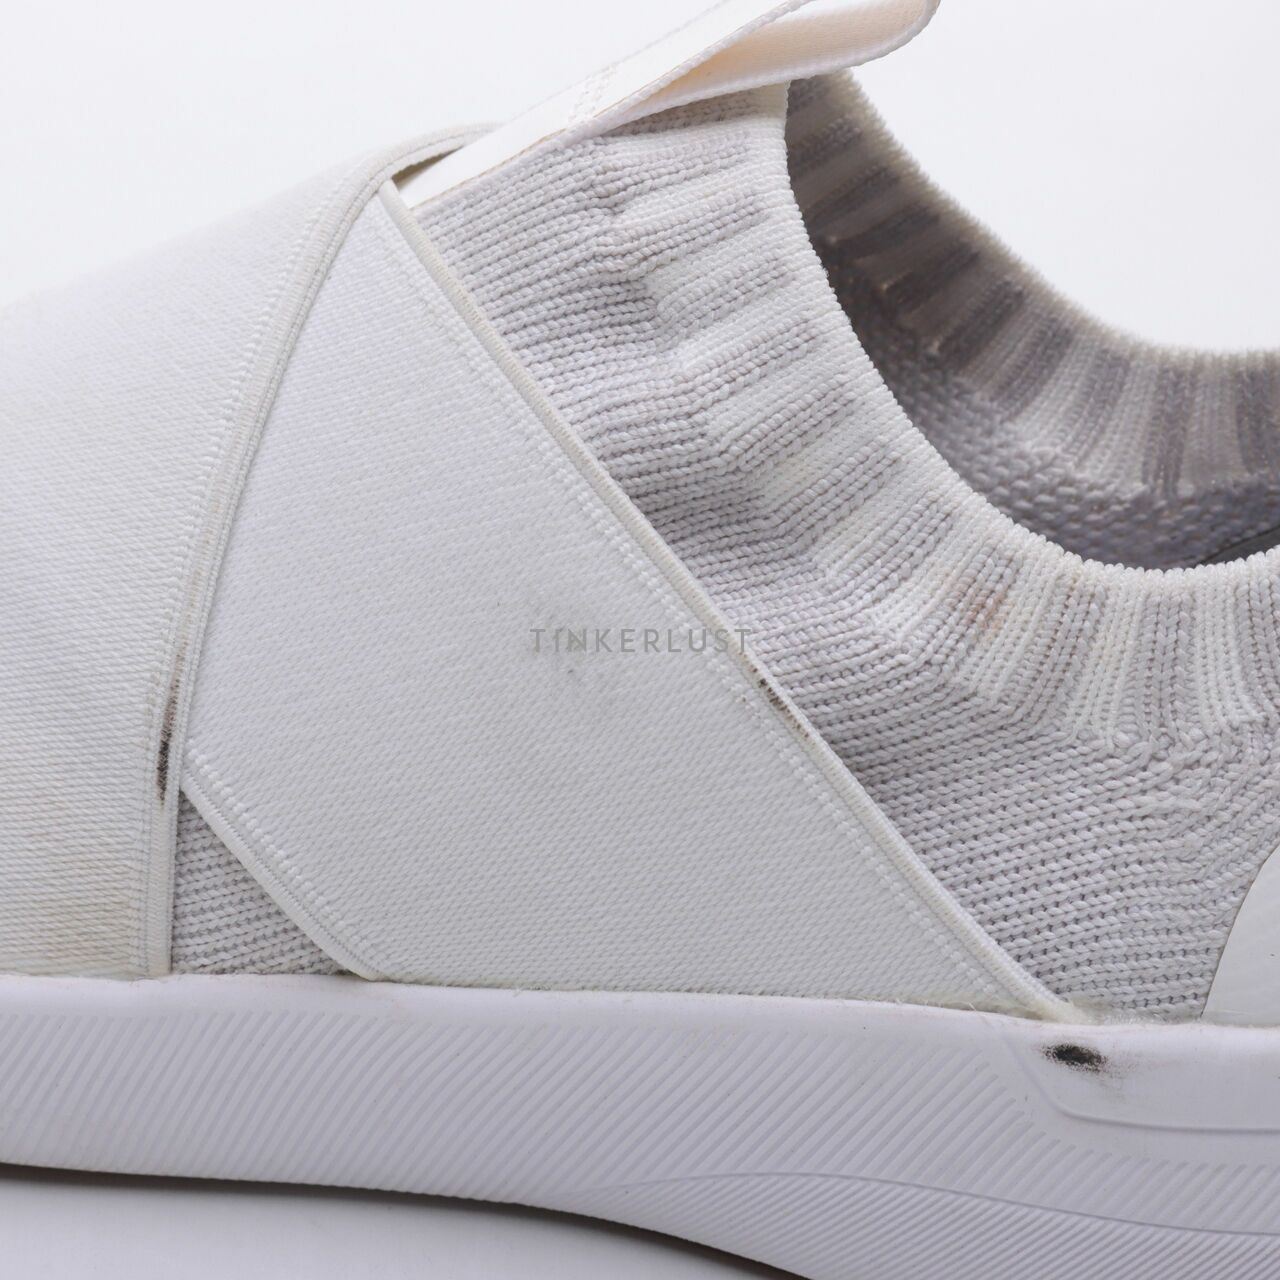 Keds Studio Jumper Engineered Mesh White Sneakers